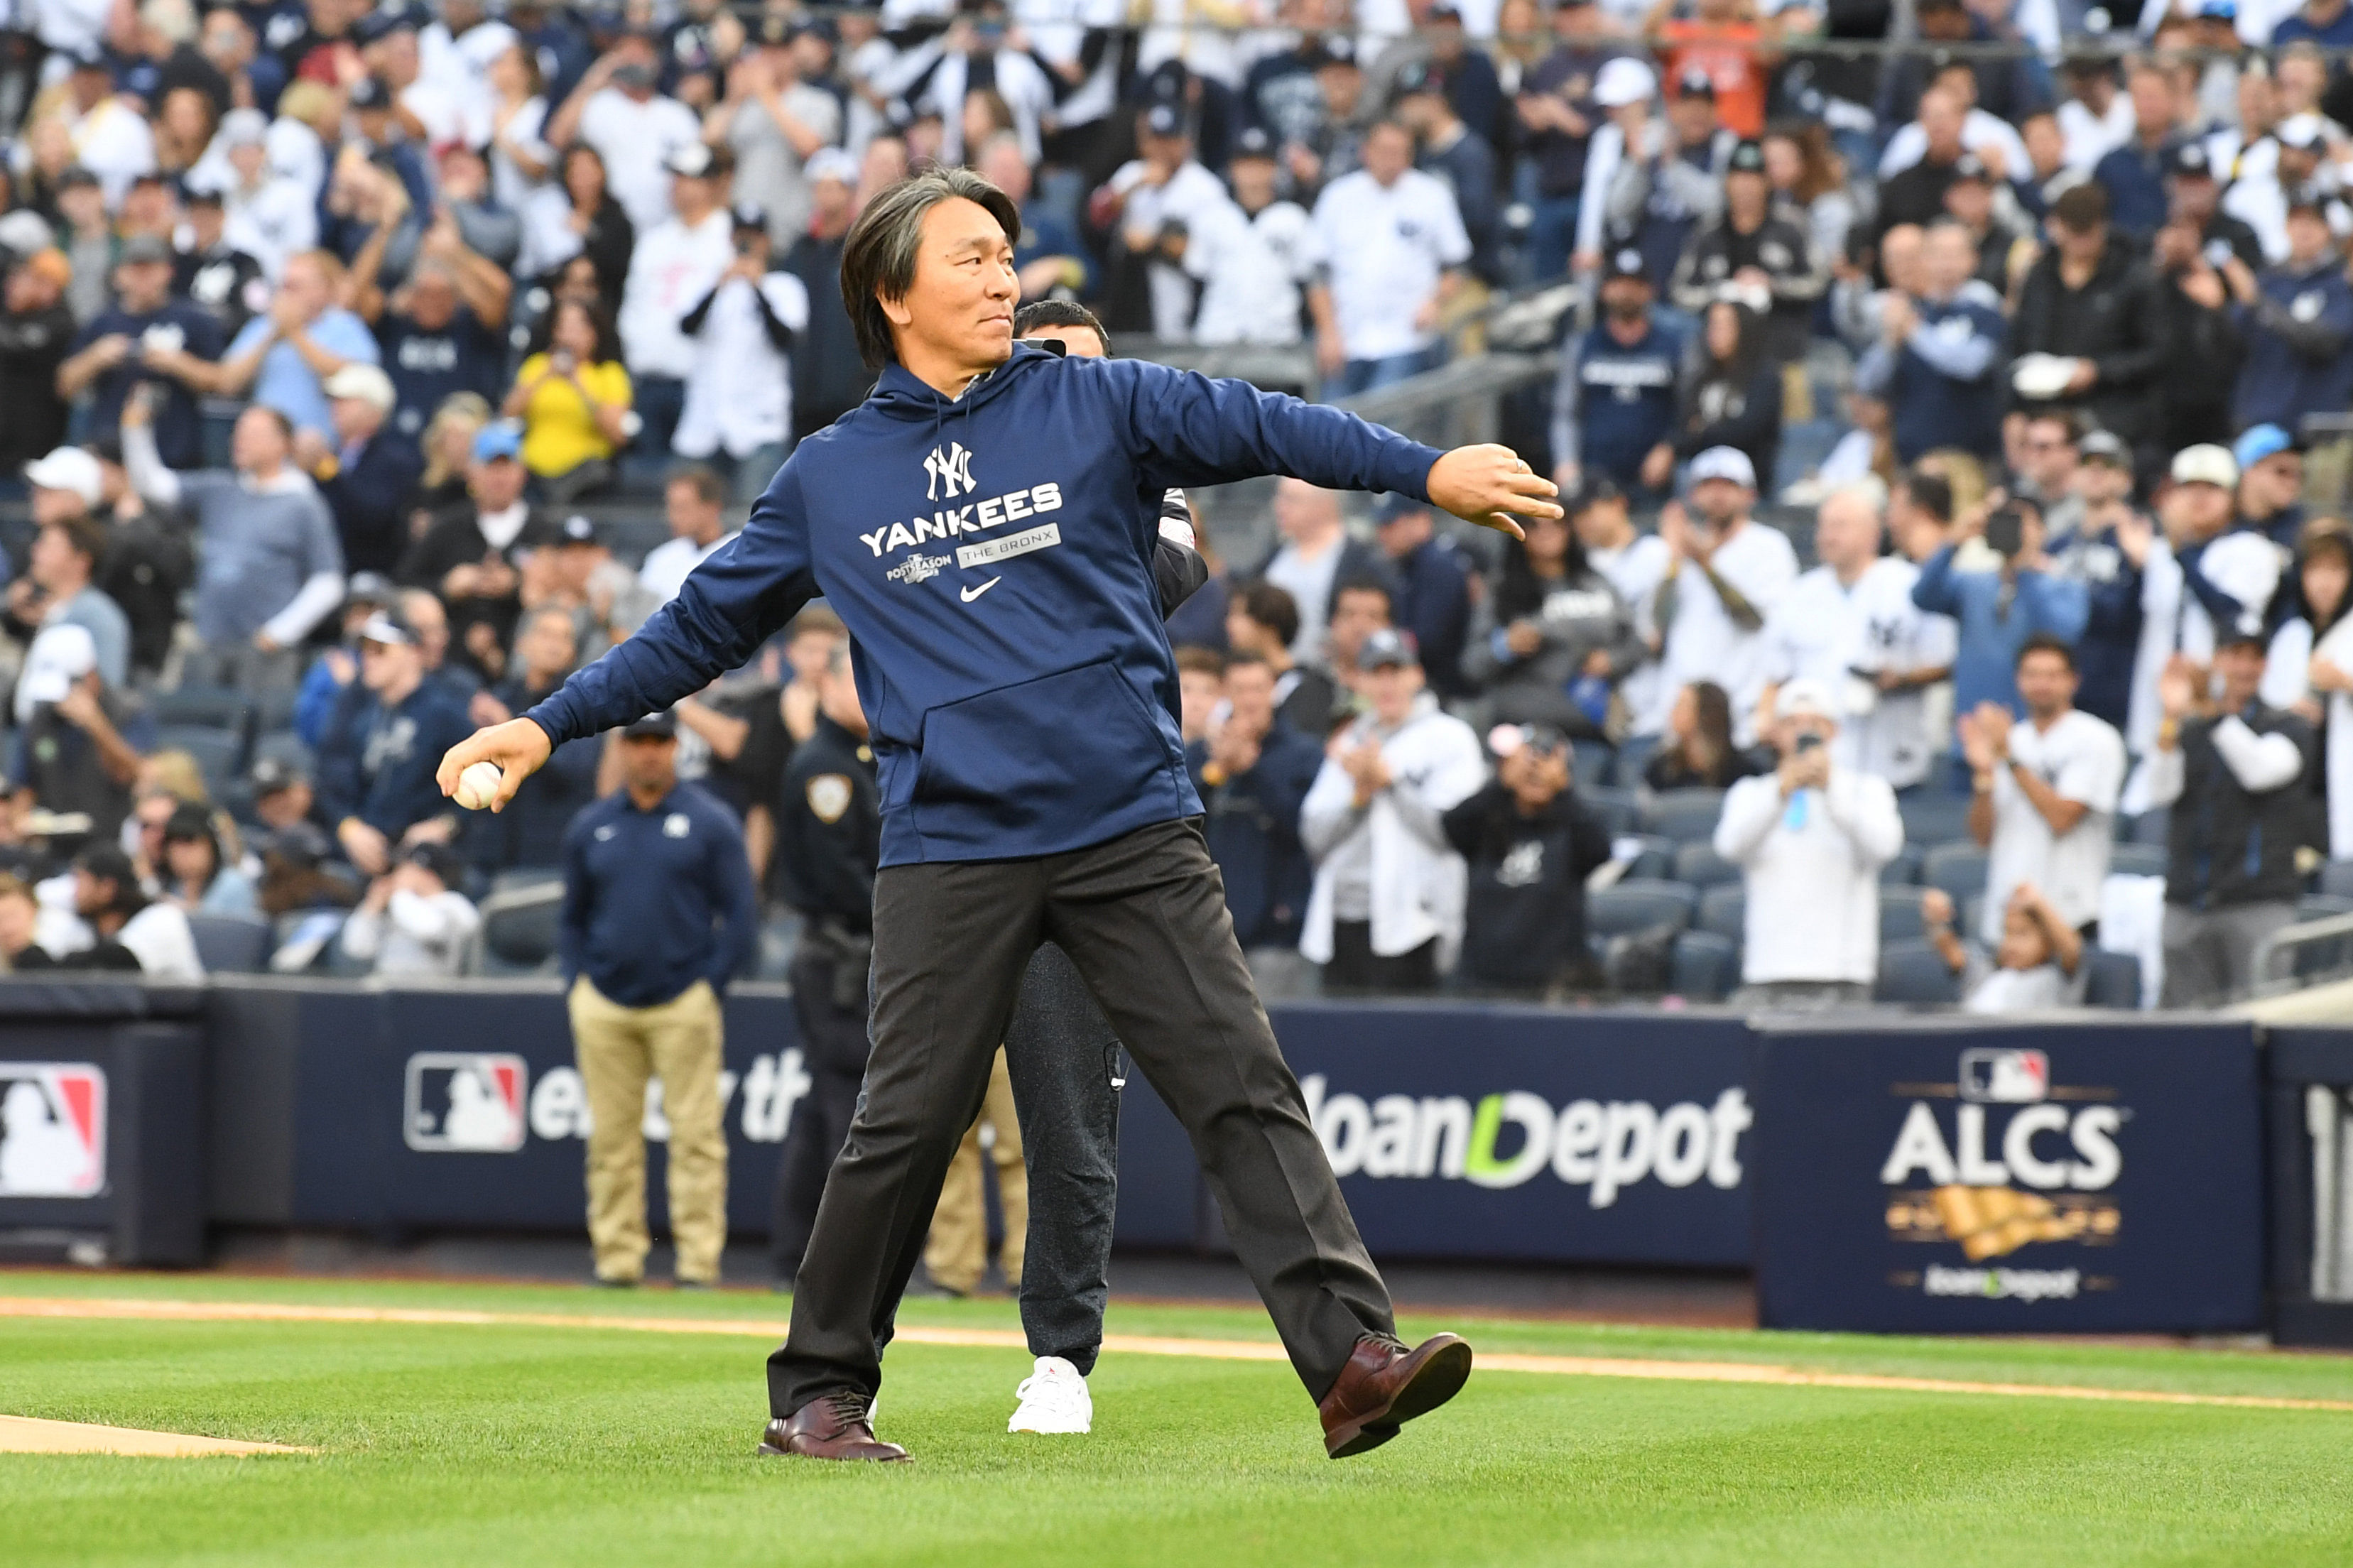 Hideki Matsui hit a lot of home runs